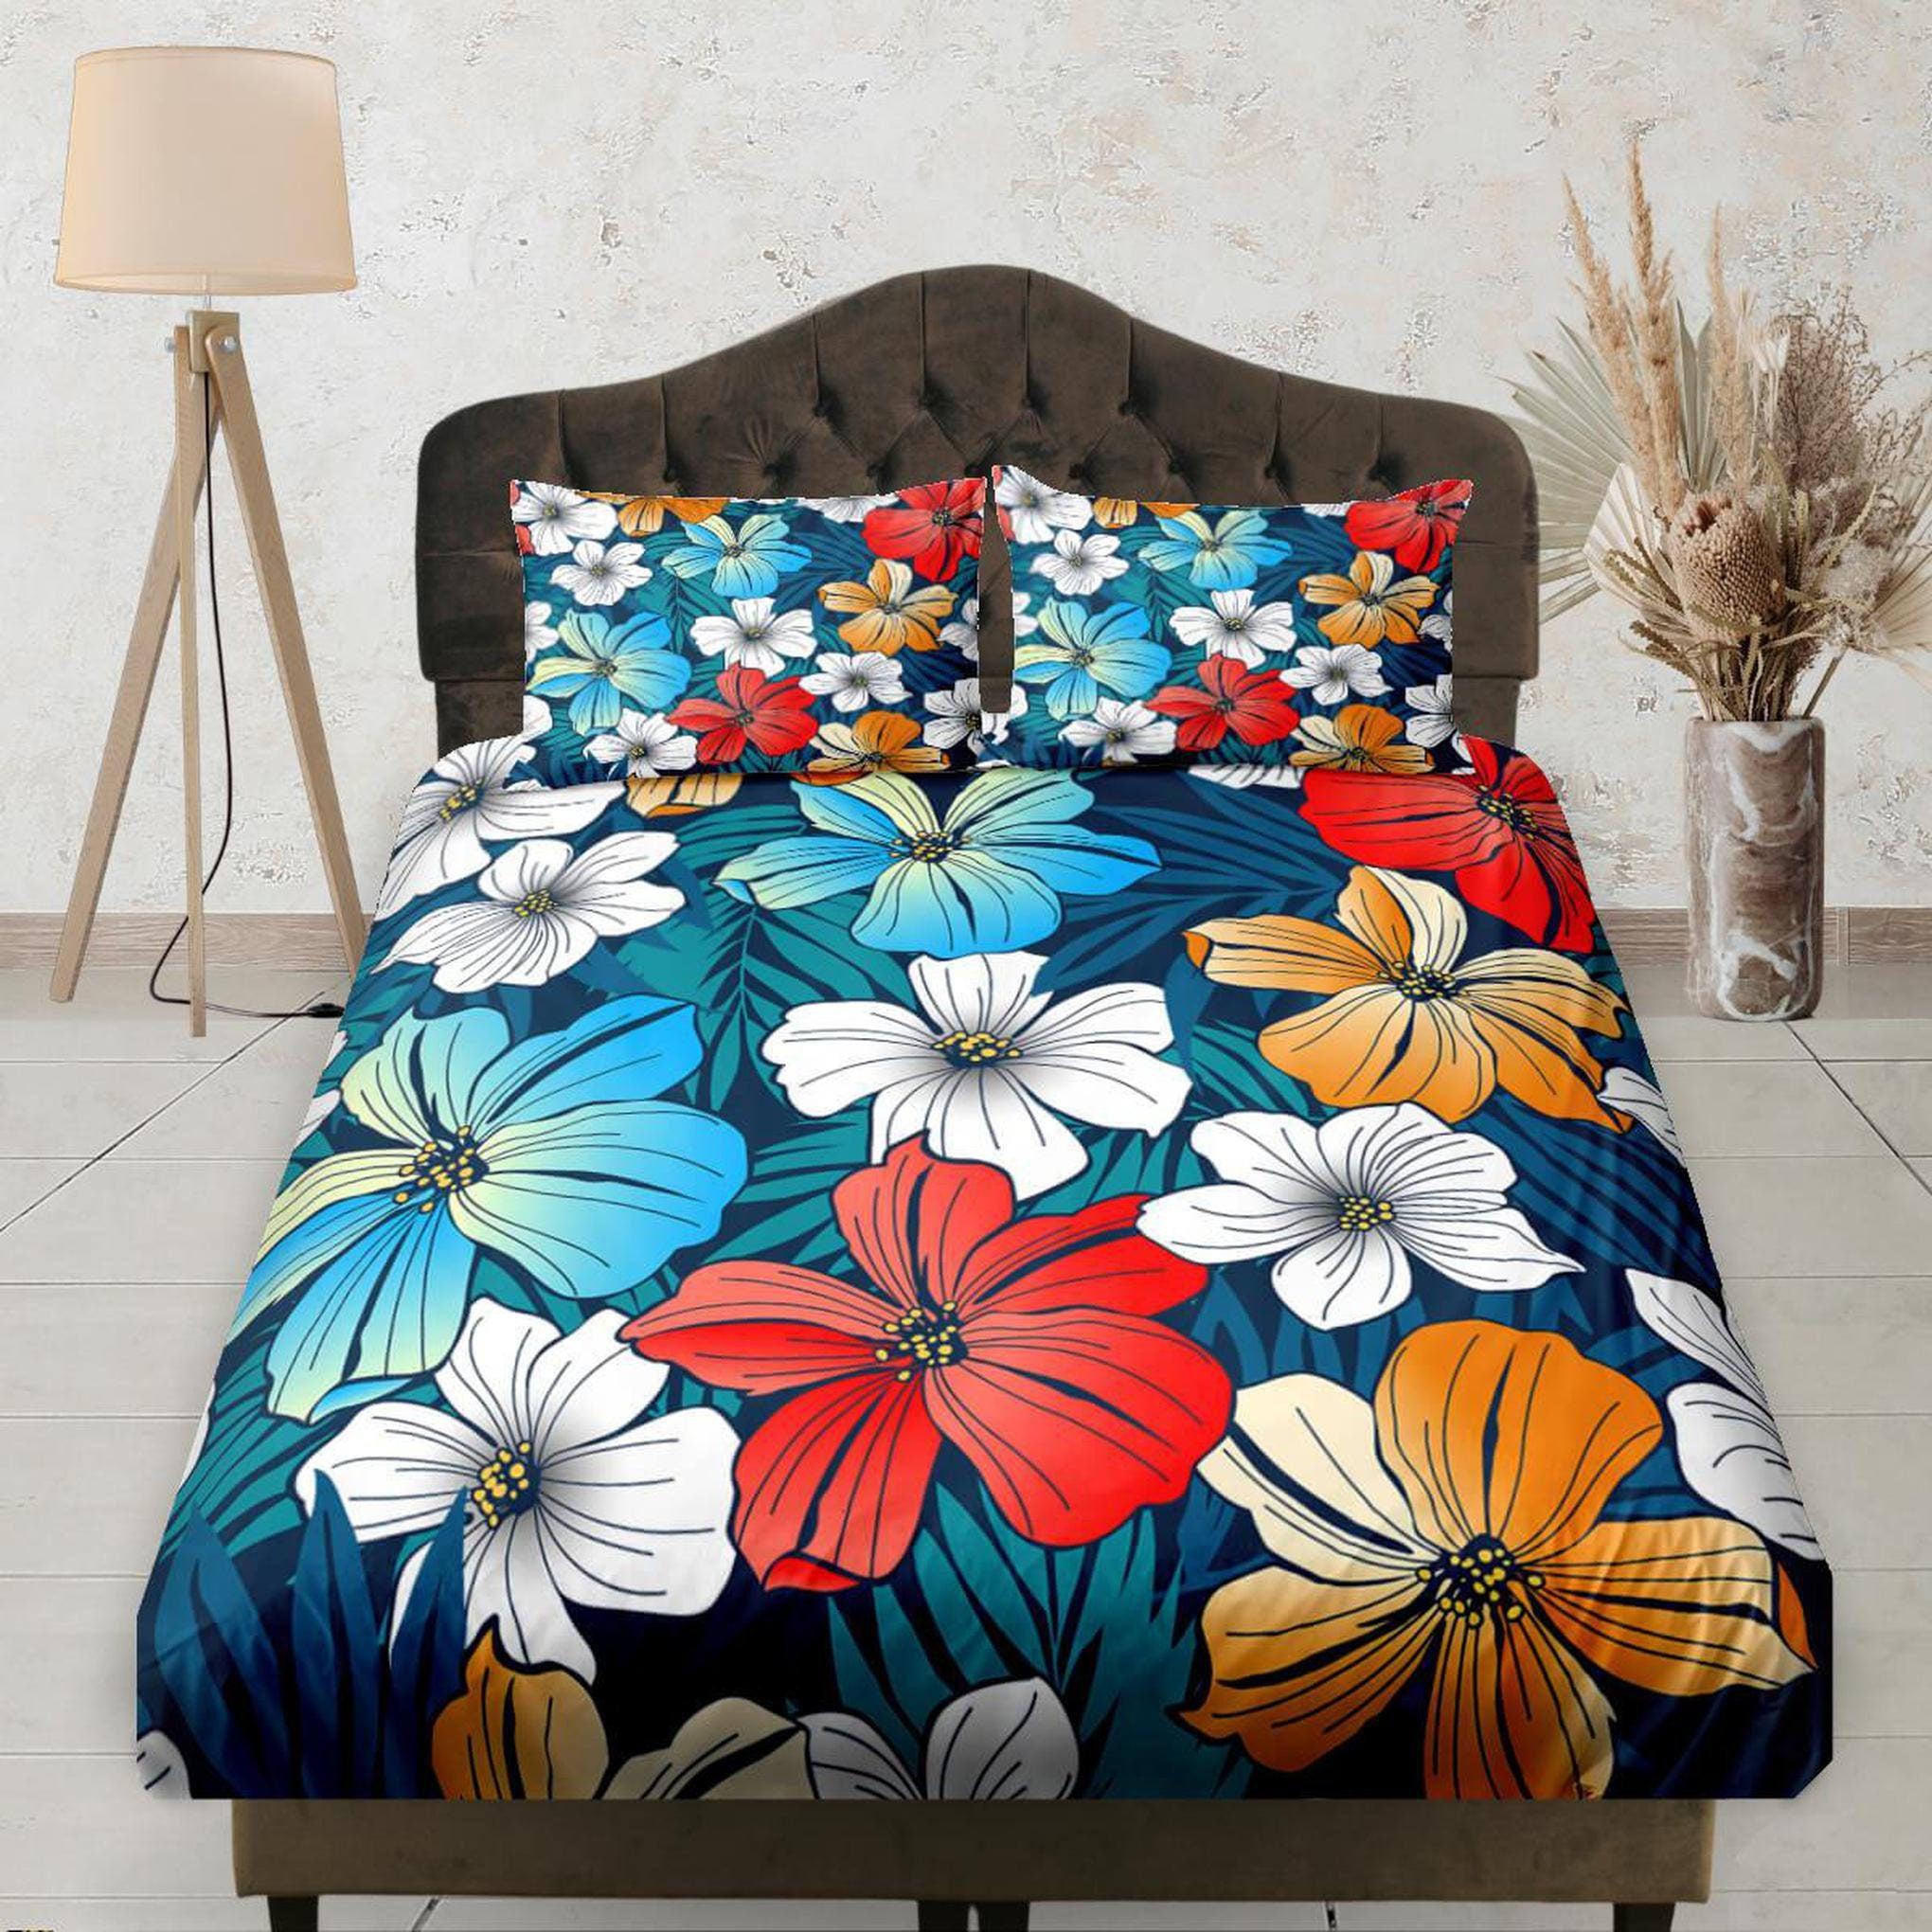 daintyduvet Floral Printed Blue Fitted Bedsheet Deep Pocket, Aesthetic Boho Bedding Set Full, Elastic Sheet, Dorm Bedding, Crib Sheet, King, Queen